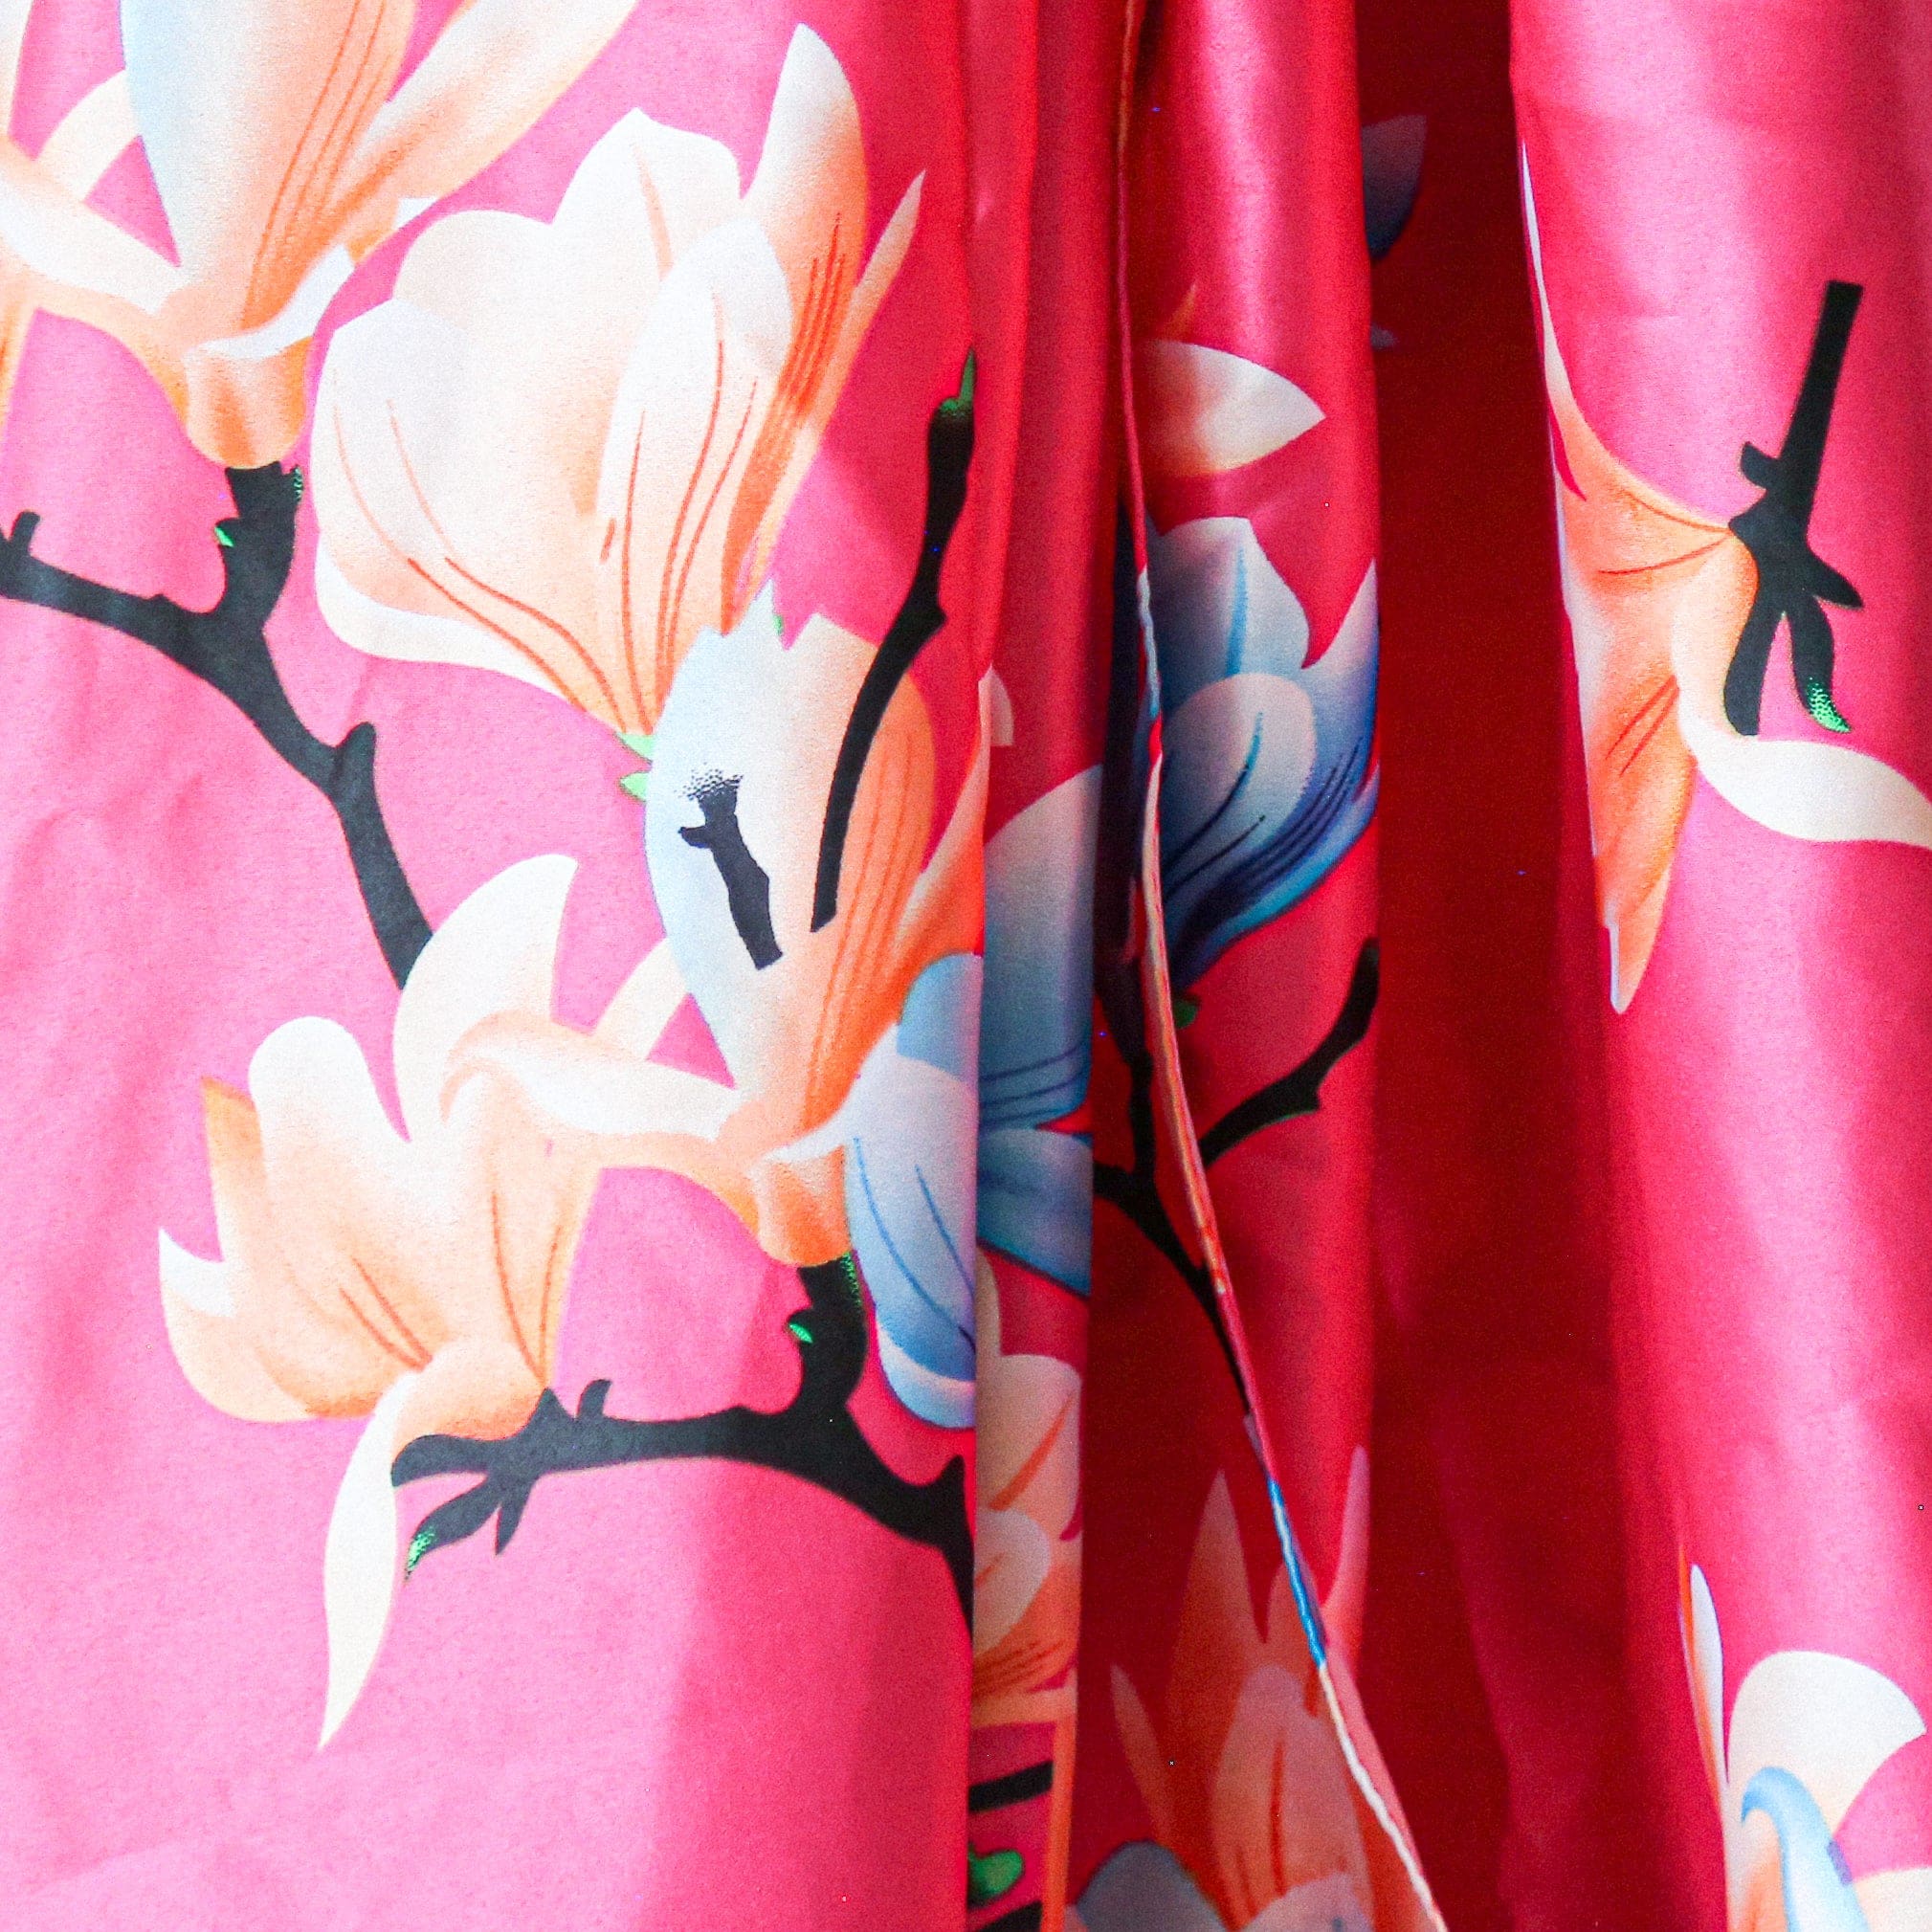 shawl Bethune - Pink - shawl